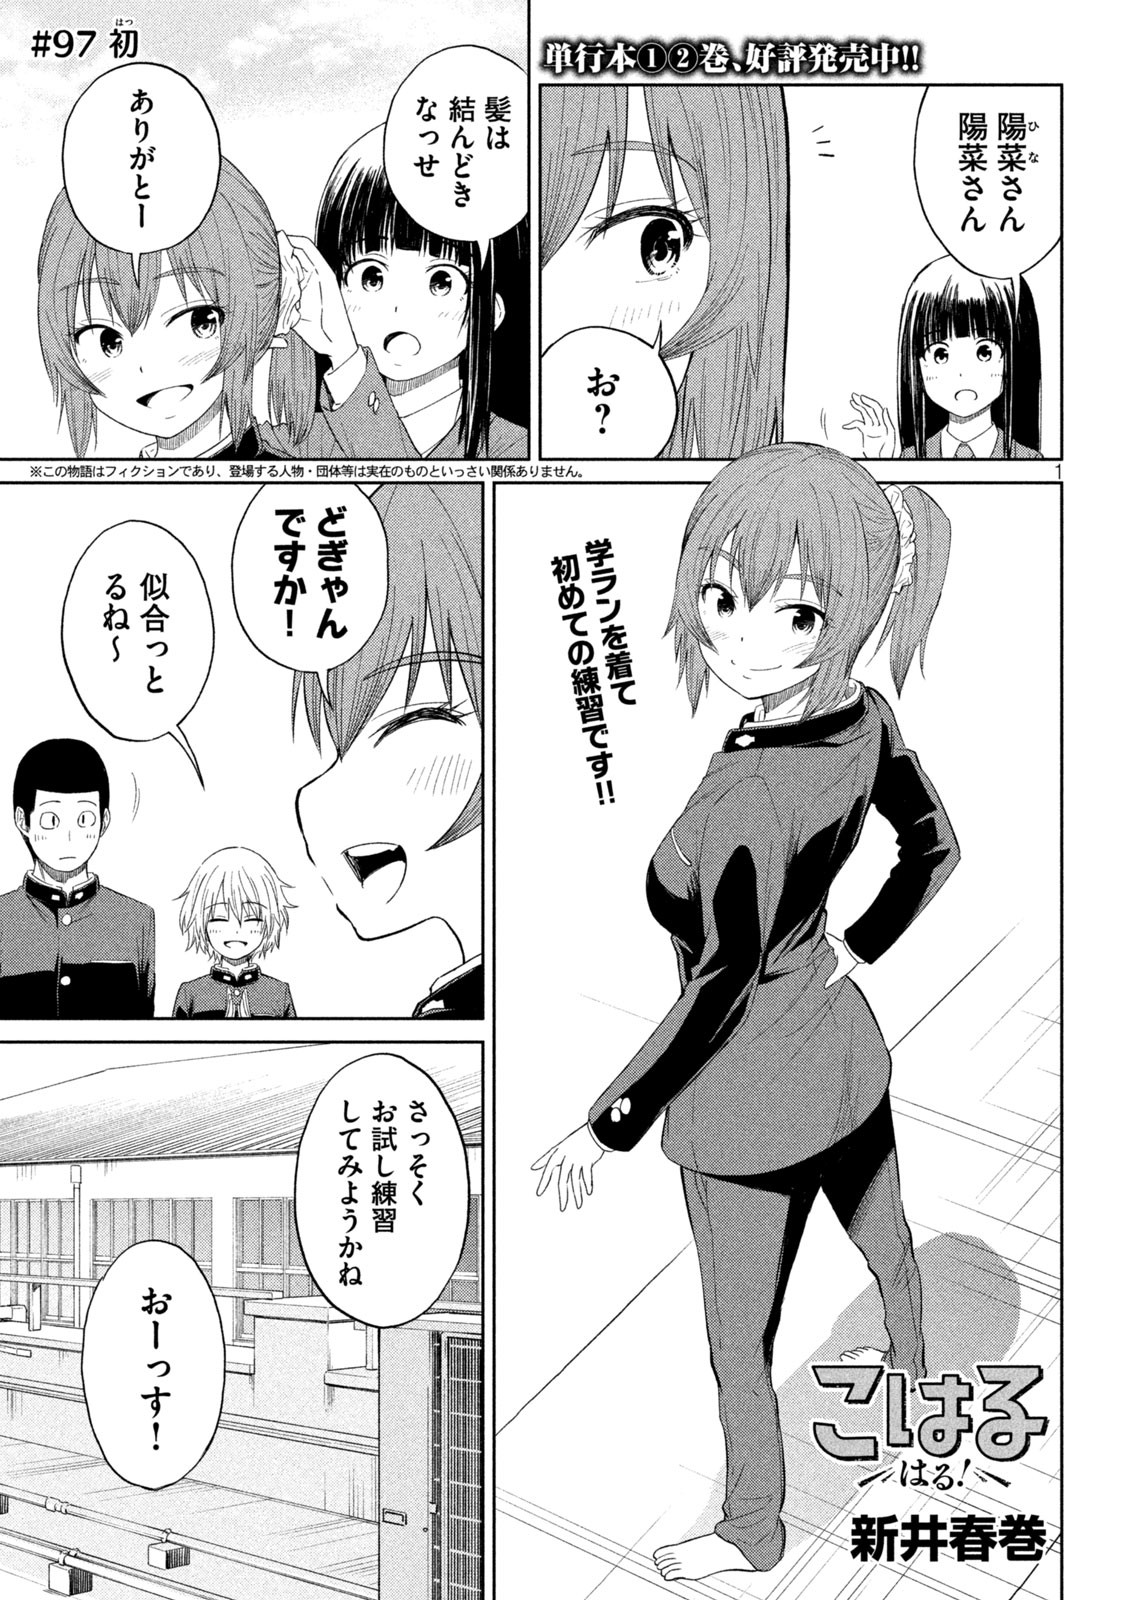 Koharu haru! - Chapter 97 - Page 1